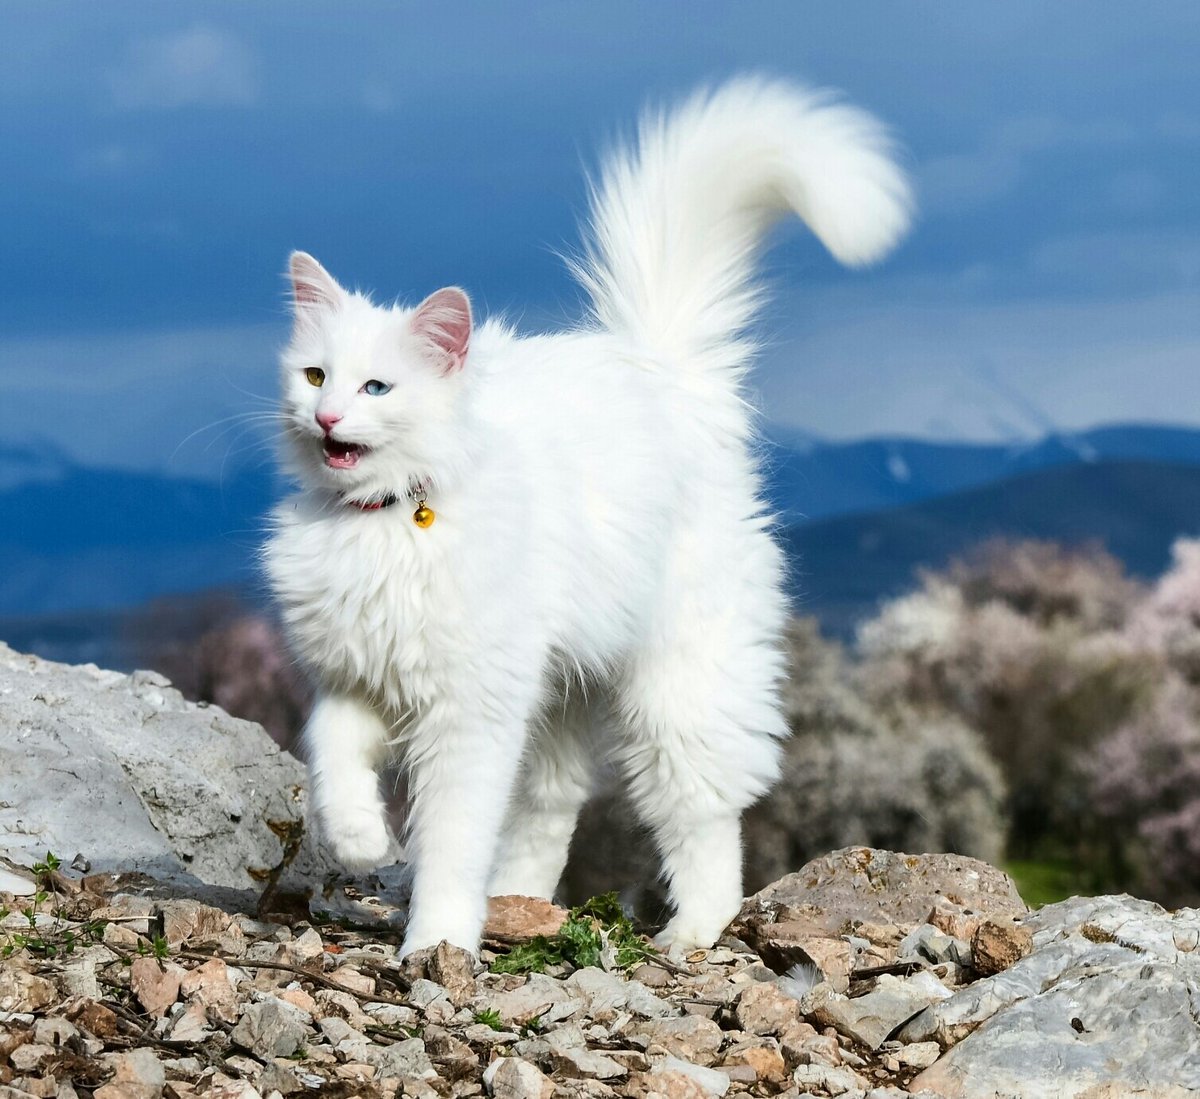 Ван кошки фото. Турецкий Ван кедиси белый. Турецкая Ванская кошка. Турецкий Ван (van Kedisi) кошка. Турецкая Ванская кошка белая.